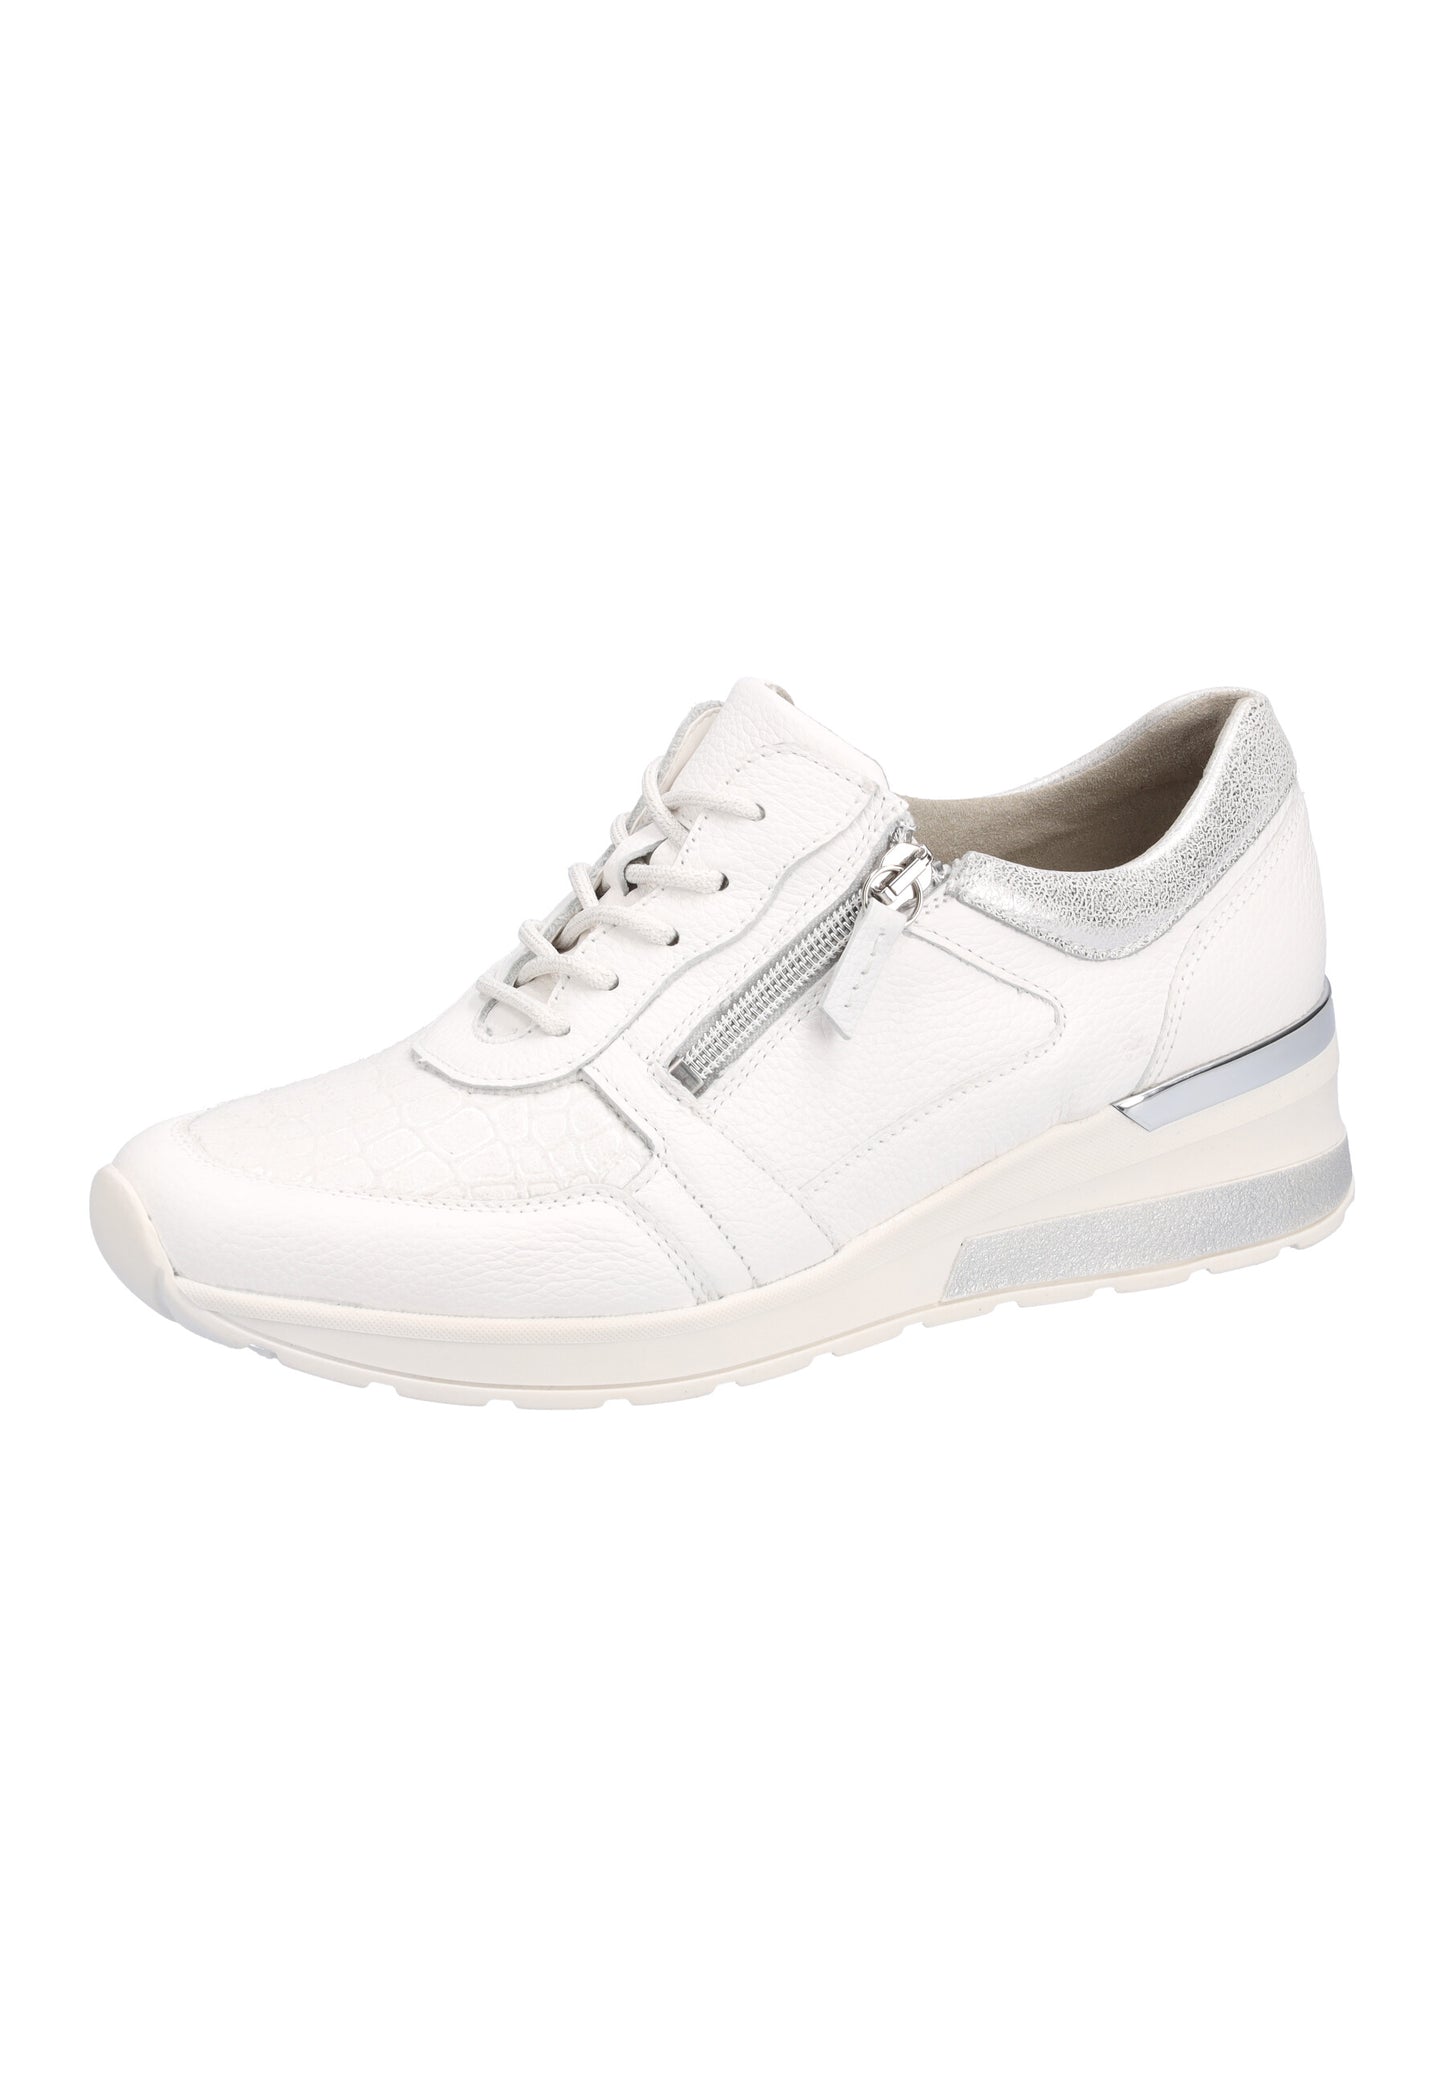 Waldlaufer 939H01 308 150 H-Clara White & Silver Trim Sneakers with Zip